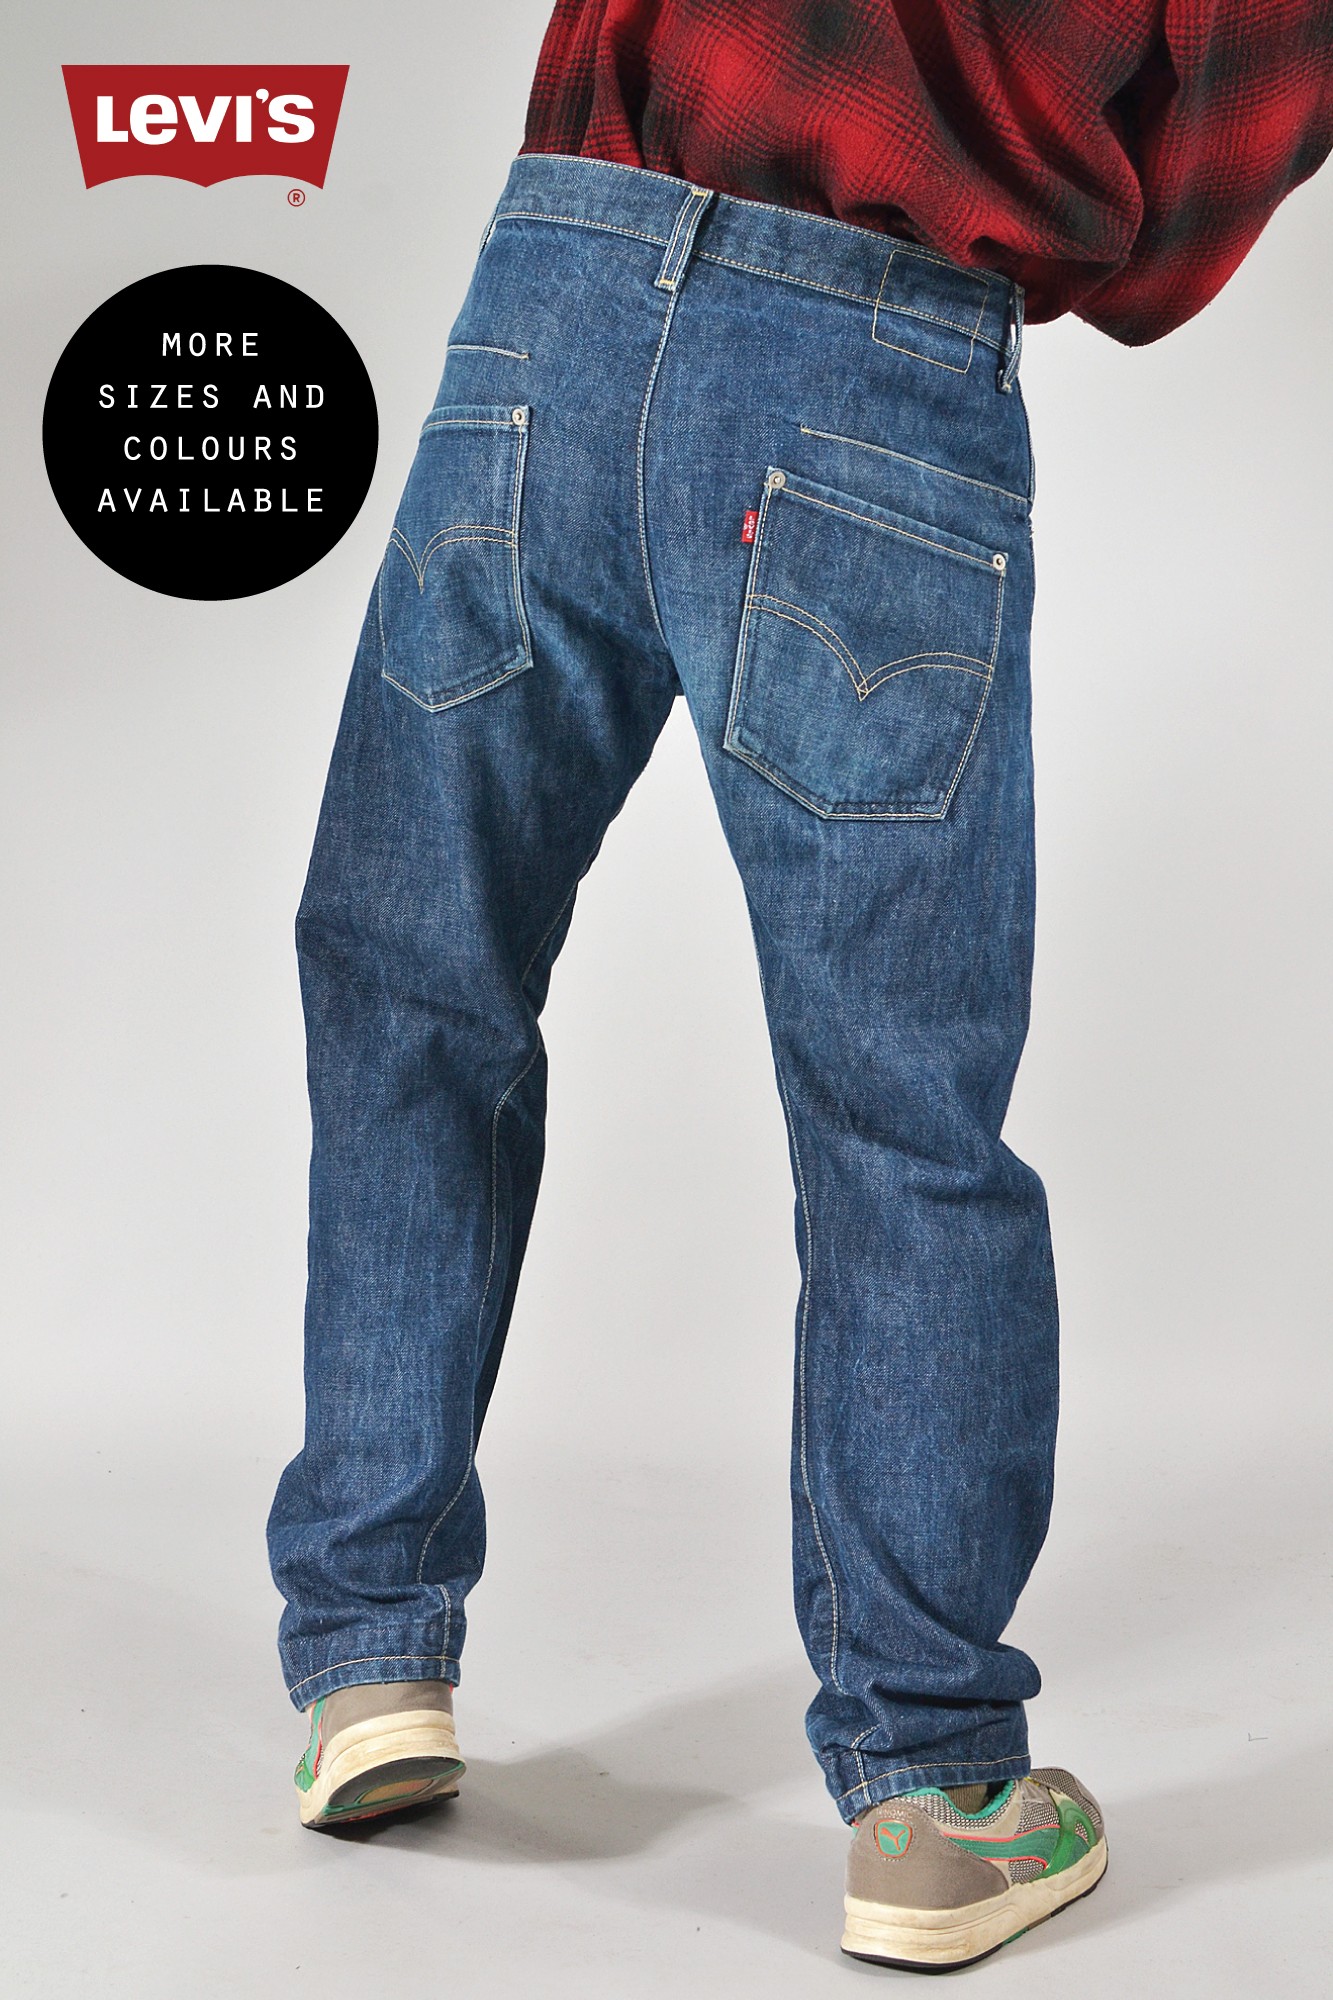 levis engineered jeans